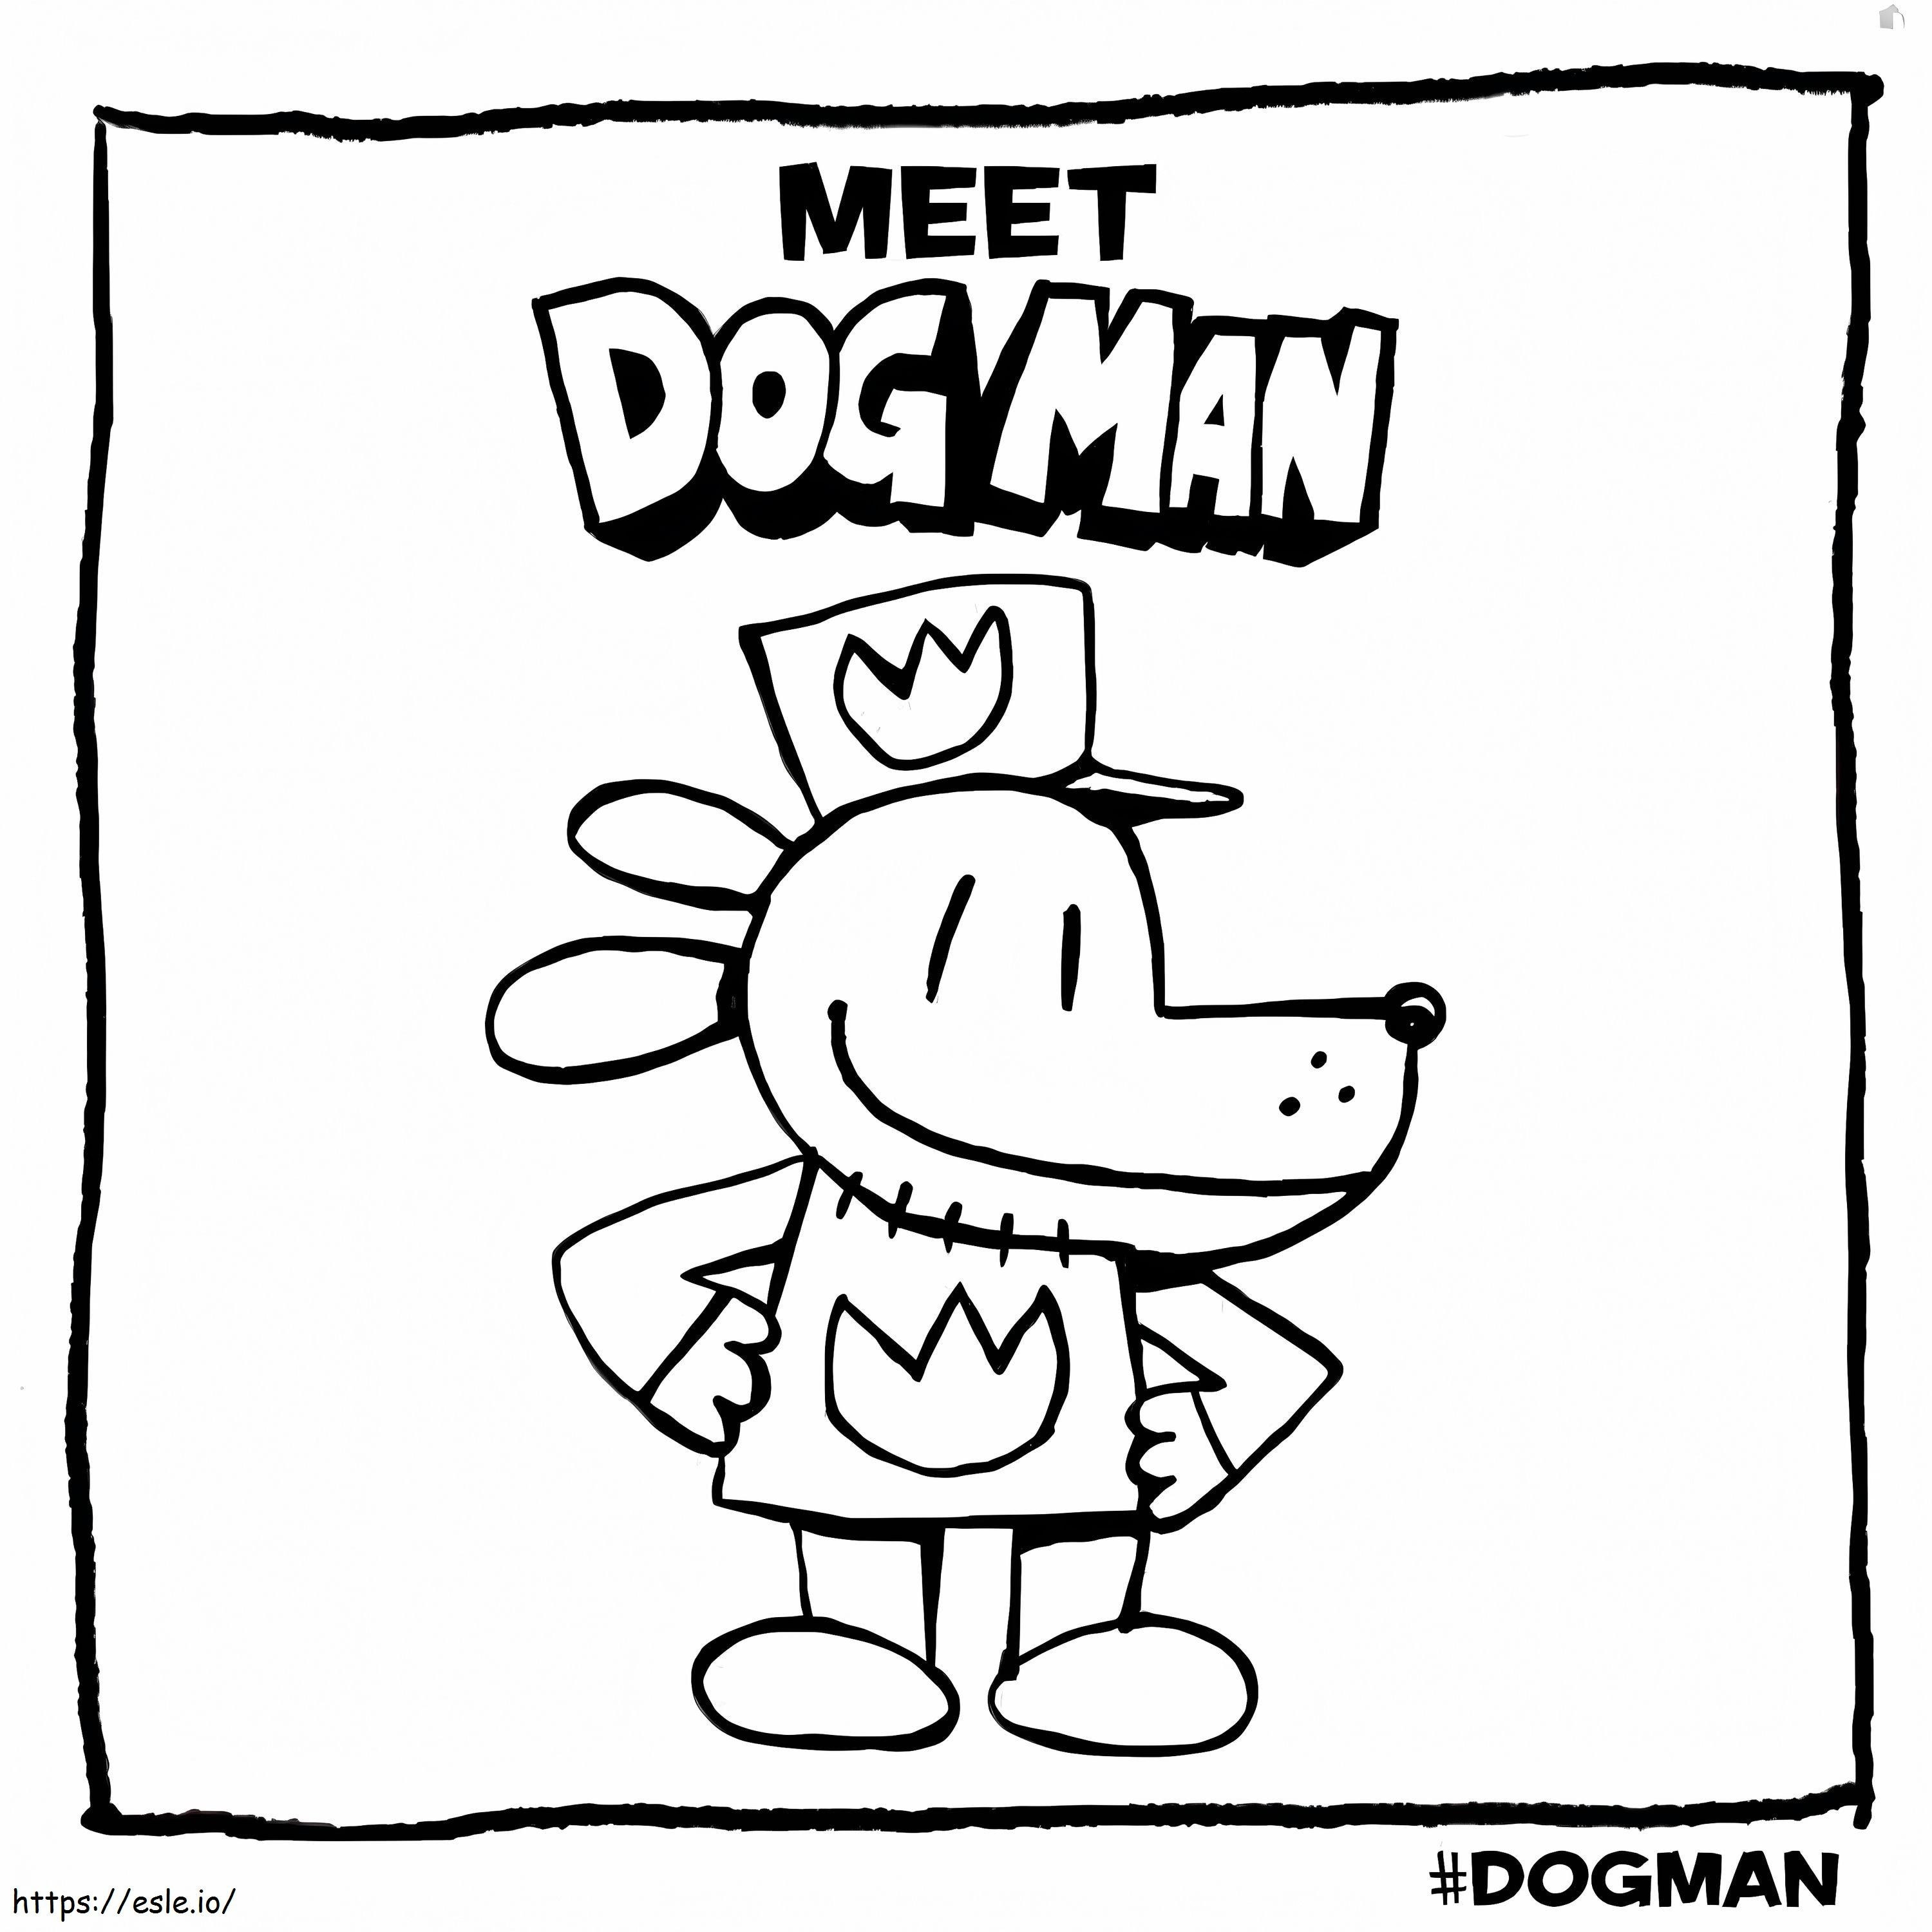 Meet Dog Man coloring page